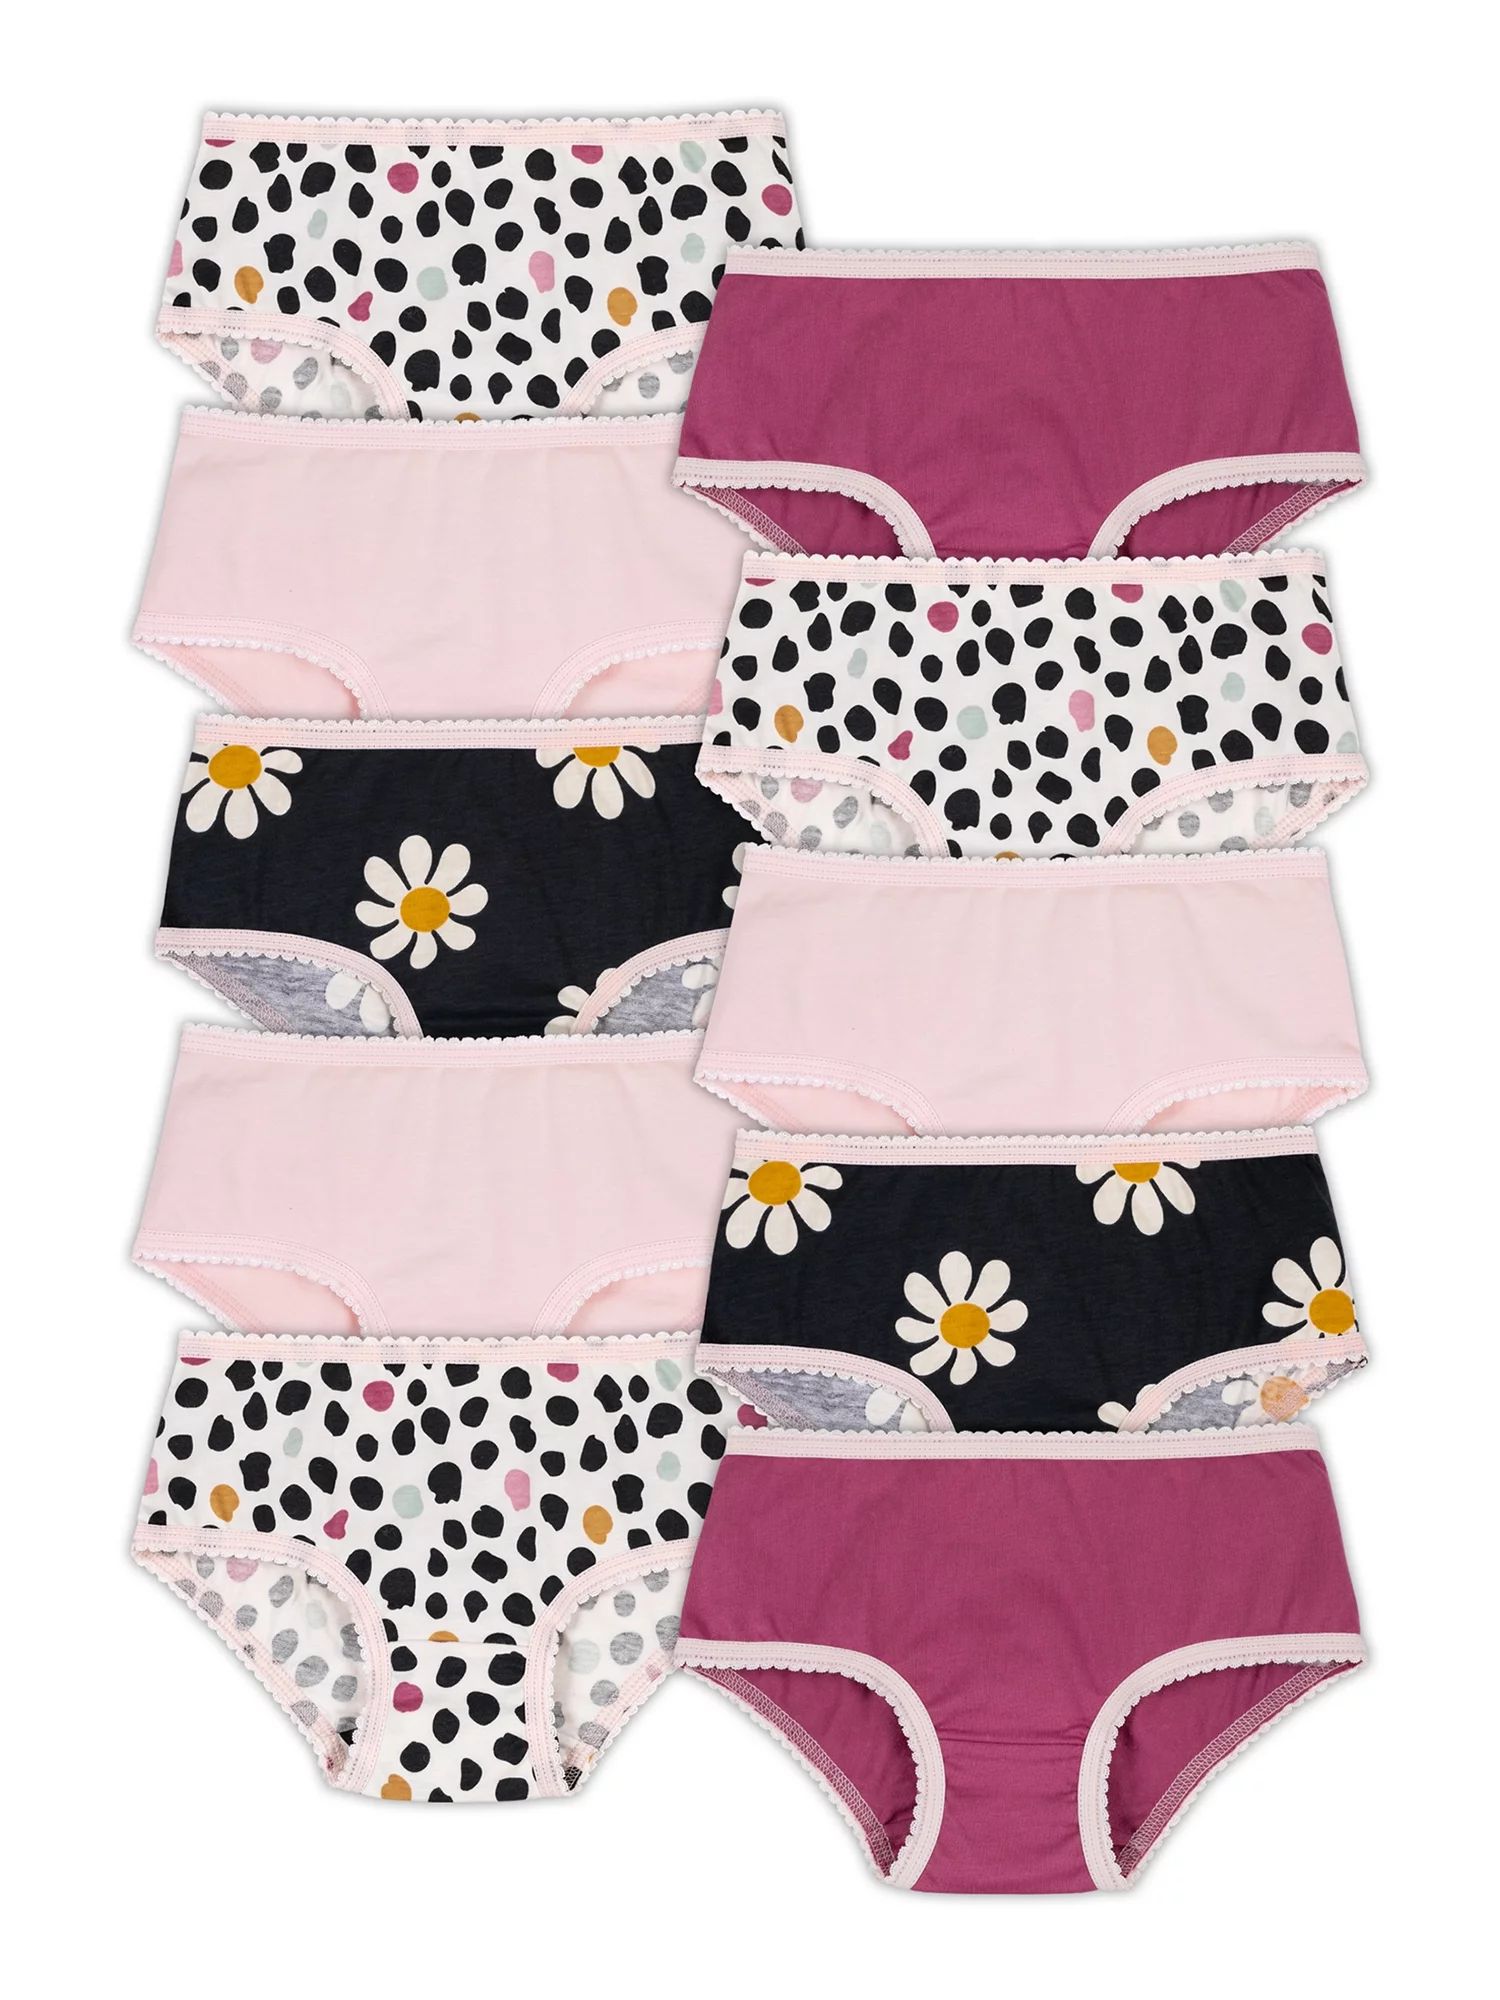 Little Star Organic Toddler Girl Brief Underwear Panties,10PK, Sizes 2T-5T | Walmart (US)